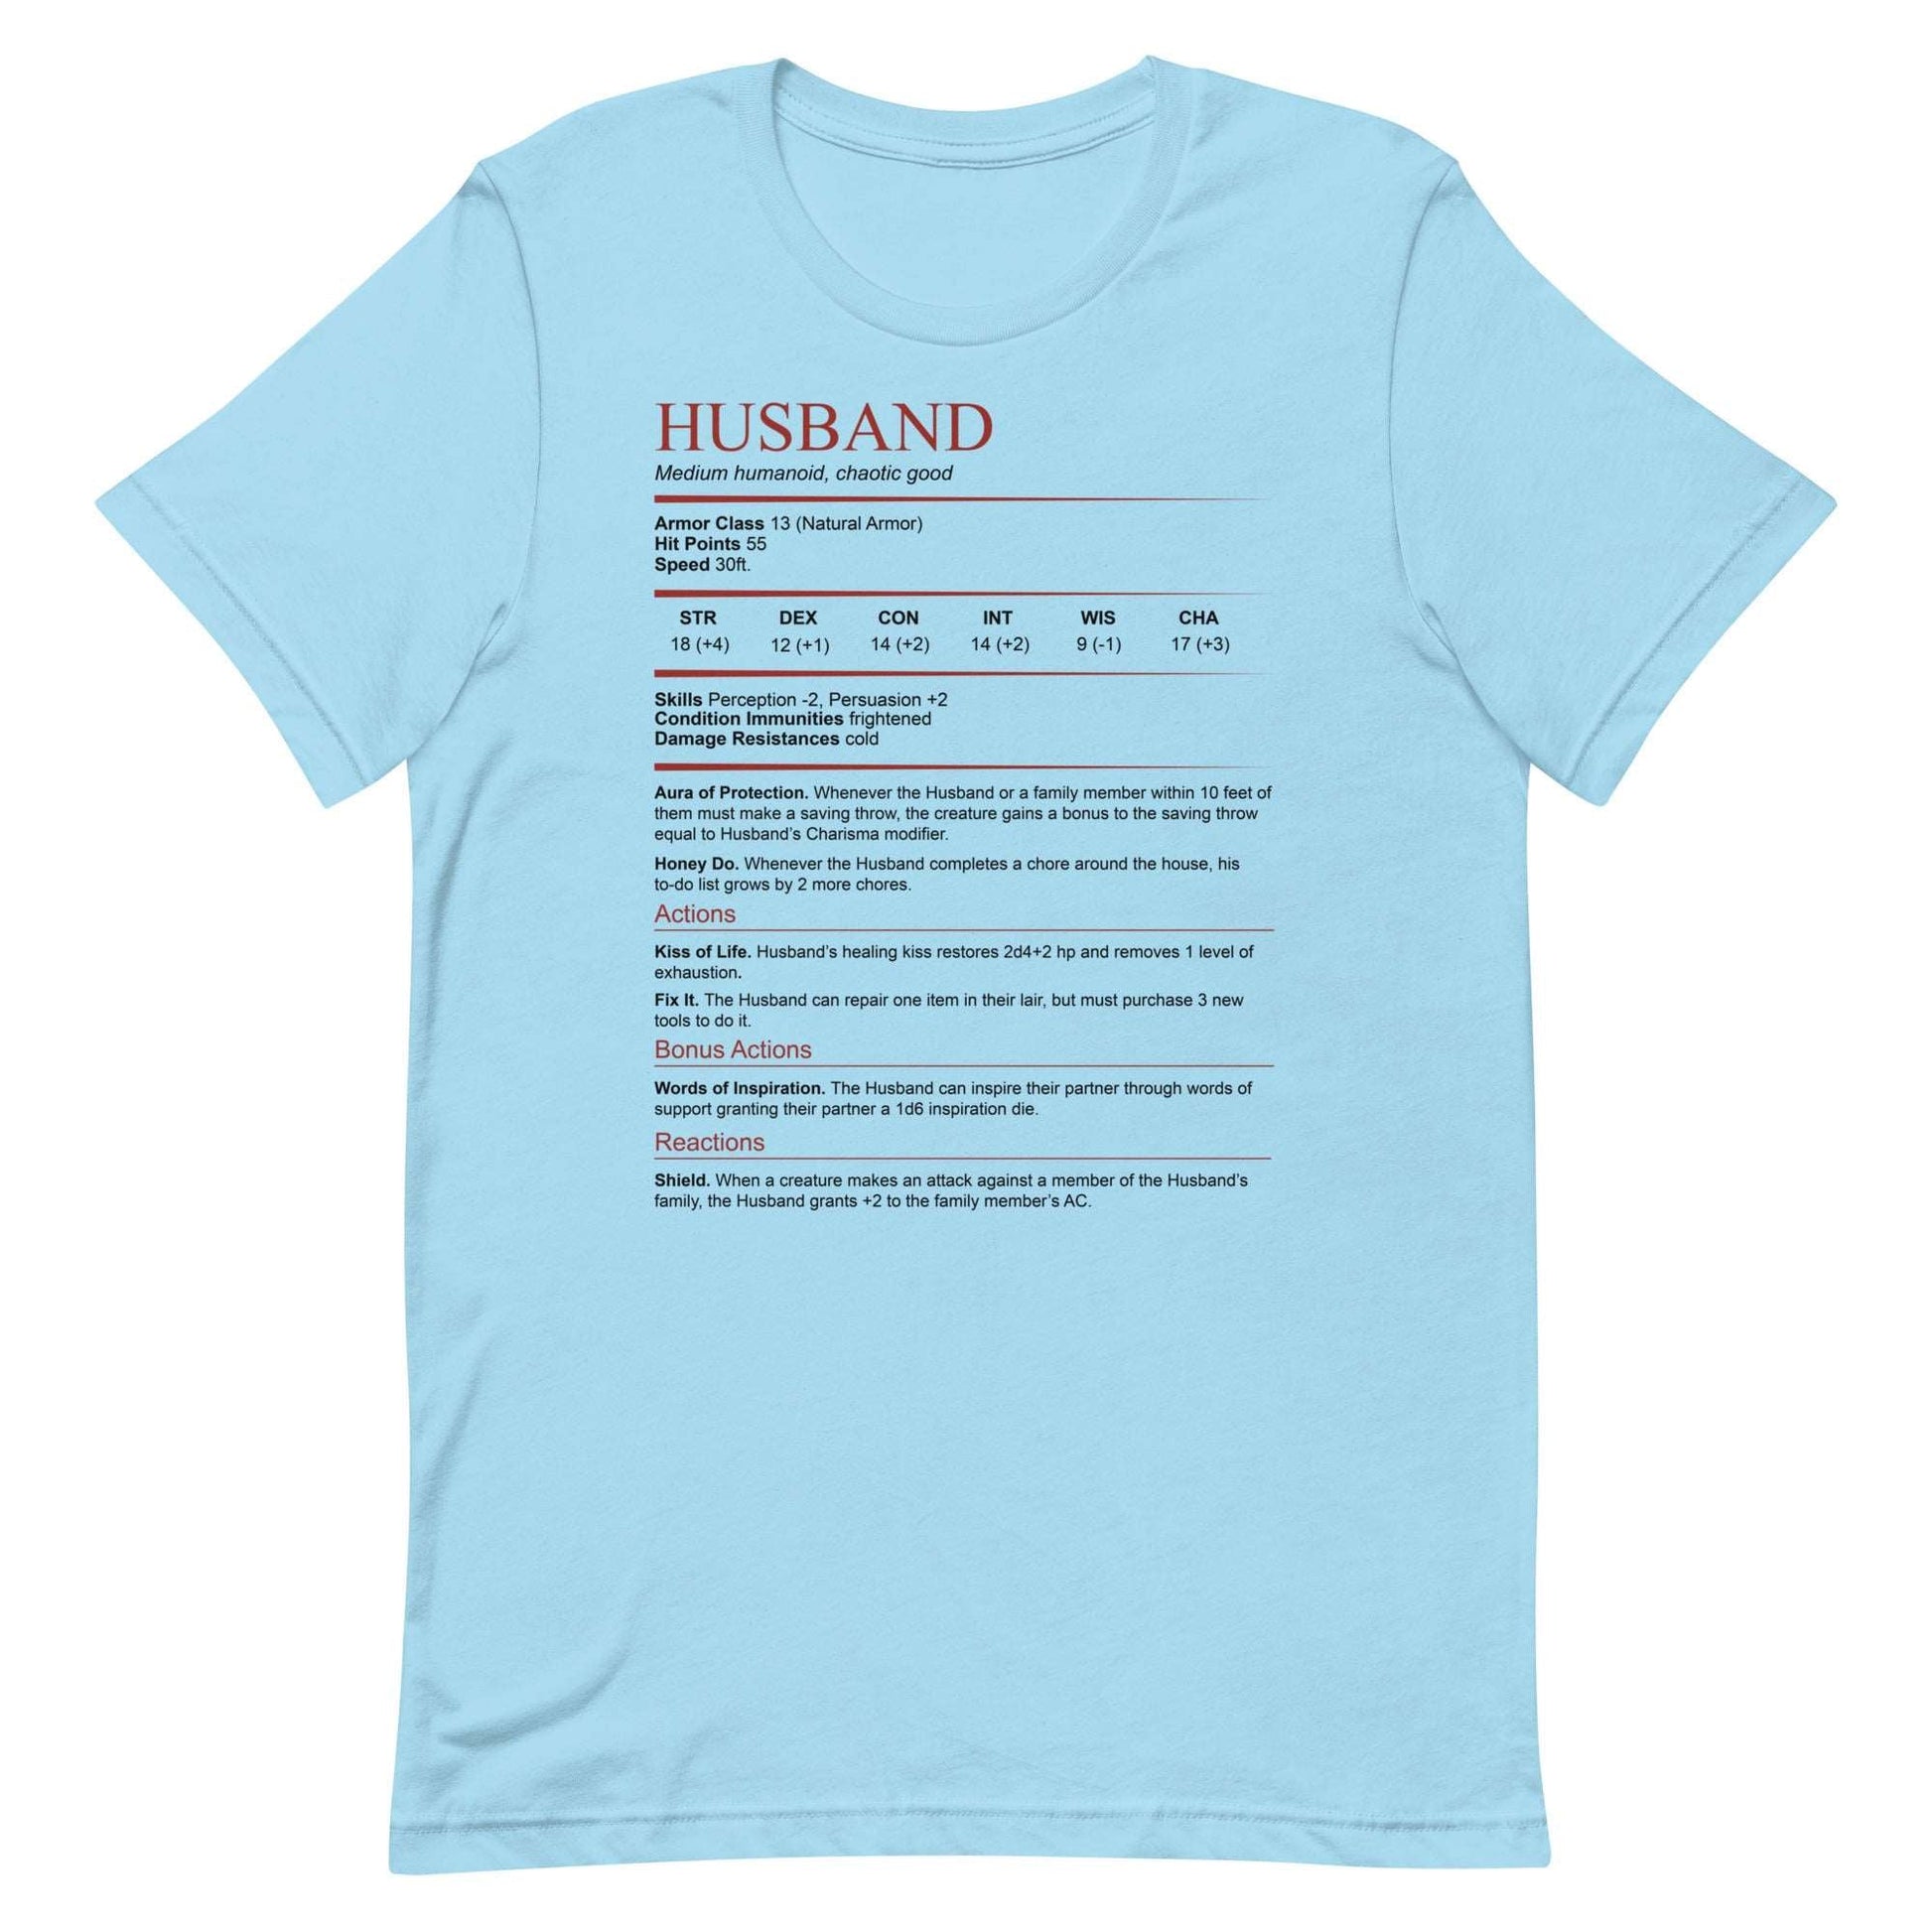 DnD Husband Stat Block Shirt - Dungeons & Dragons Anniversary Valentine's Day Gift T-Shirt Ocean Blue / S